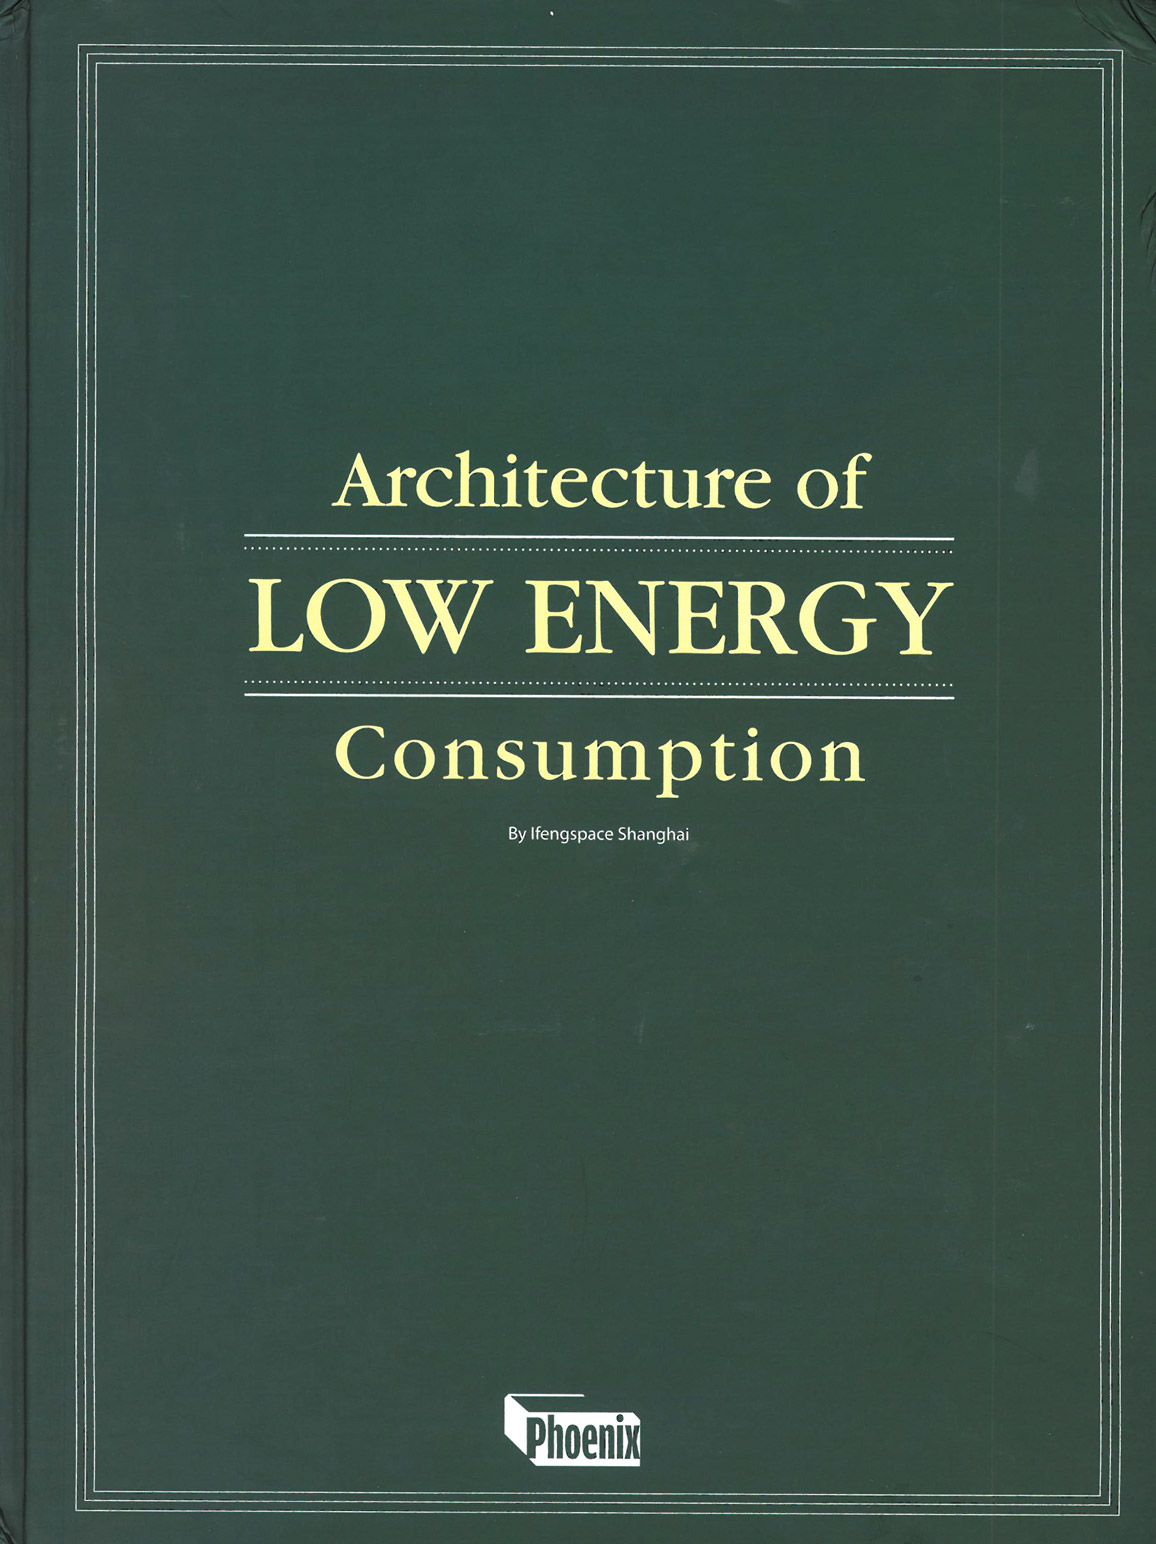 Low Energy Consumption by Phoenix 